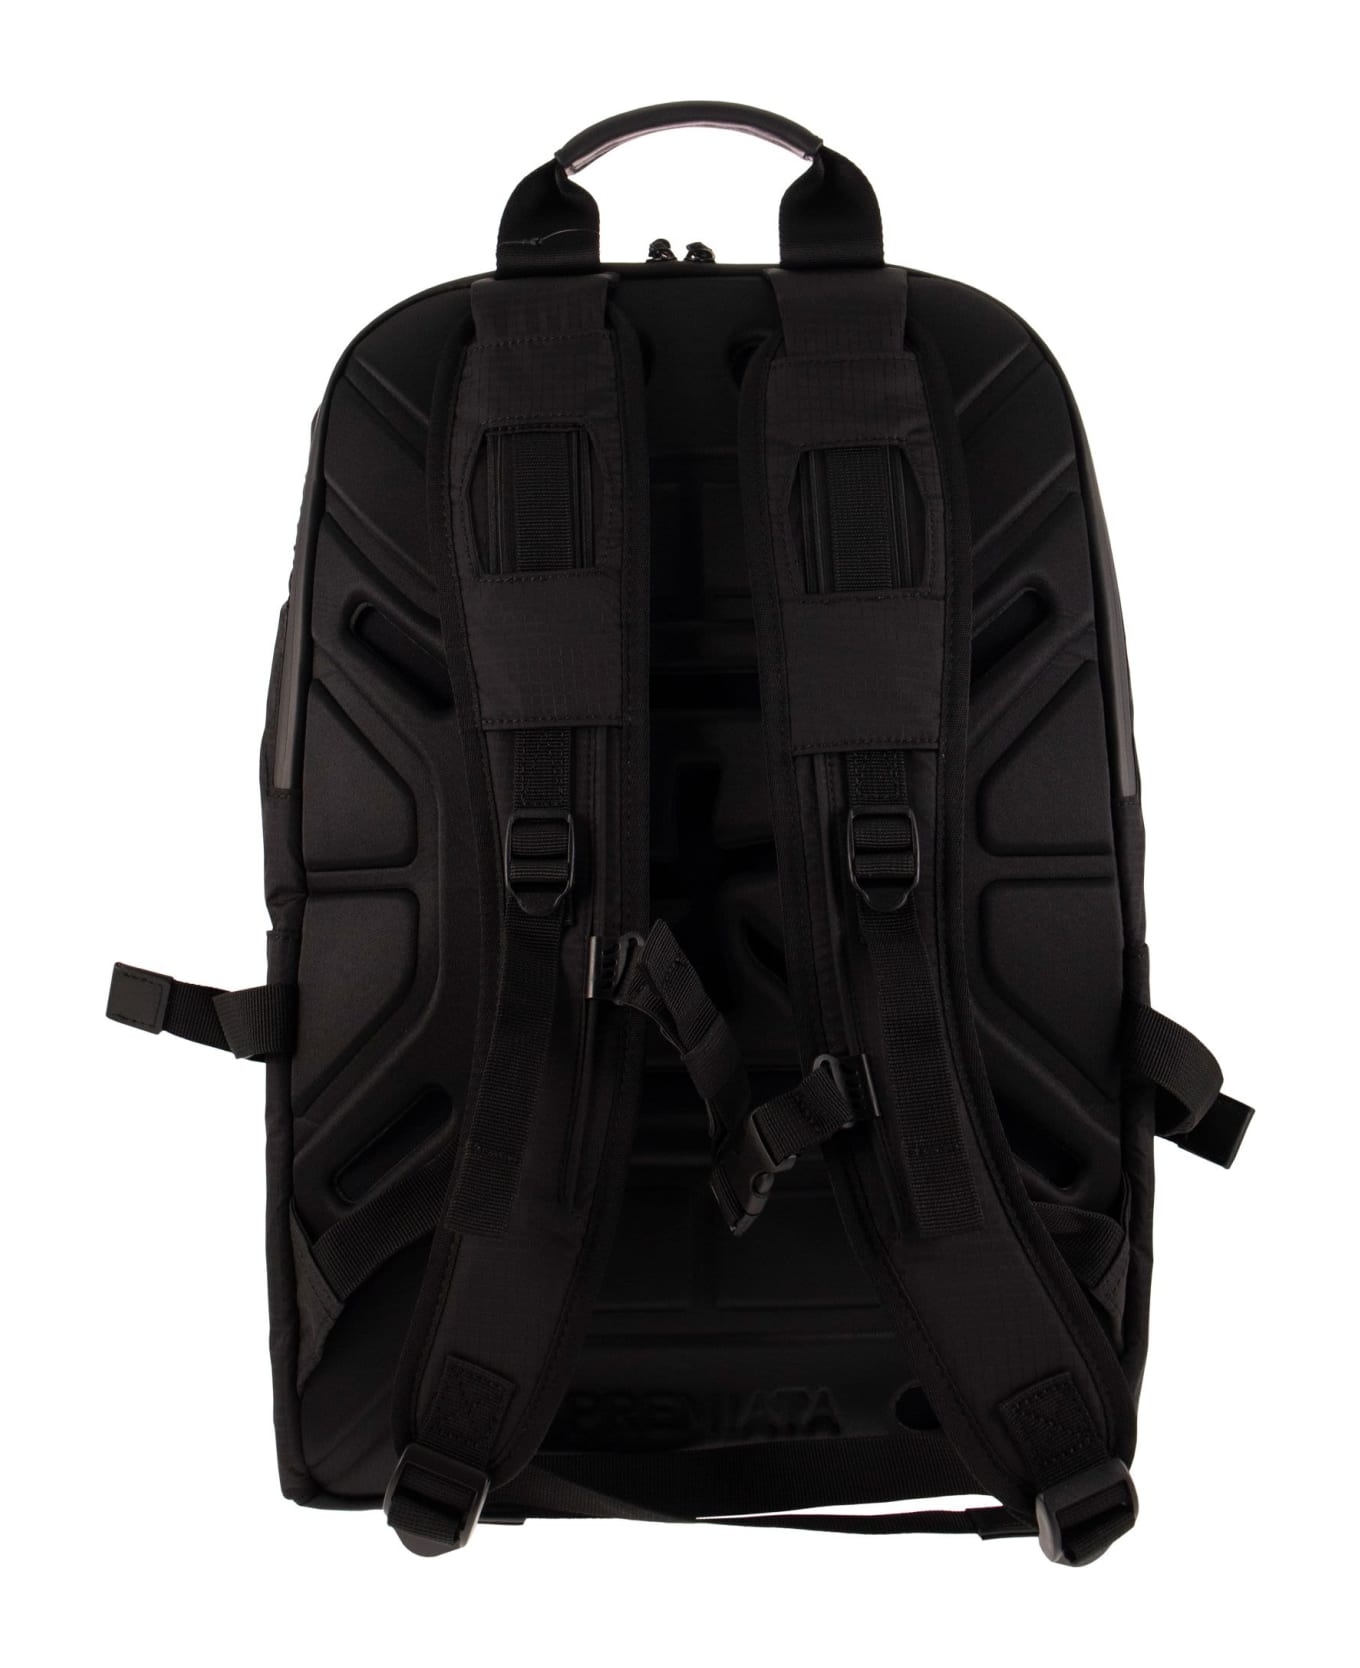 Premiata Ventura - Backpack With Hooks - Black バックパック